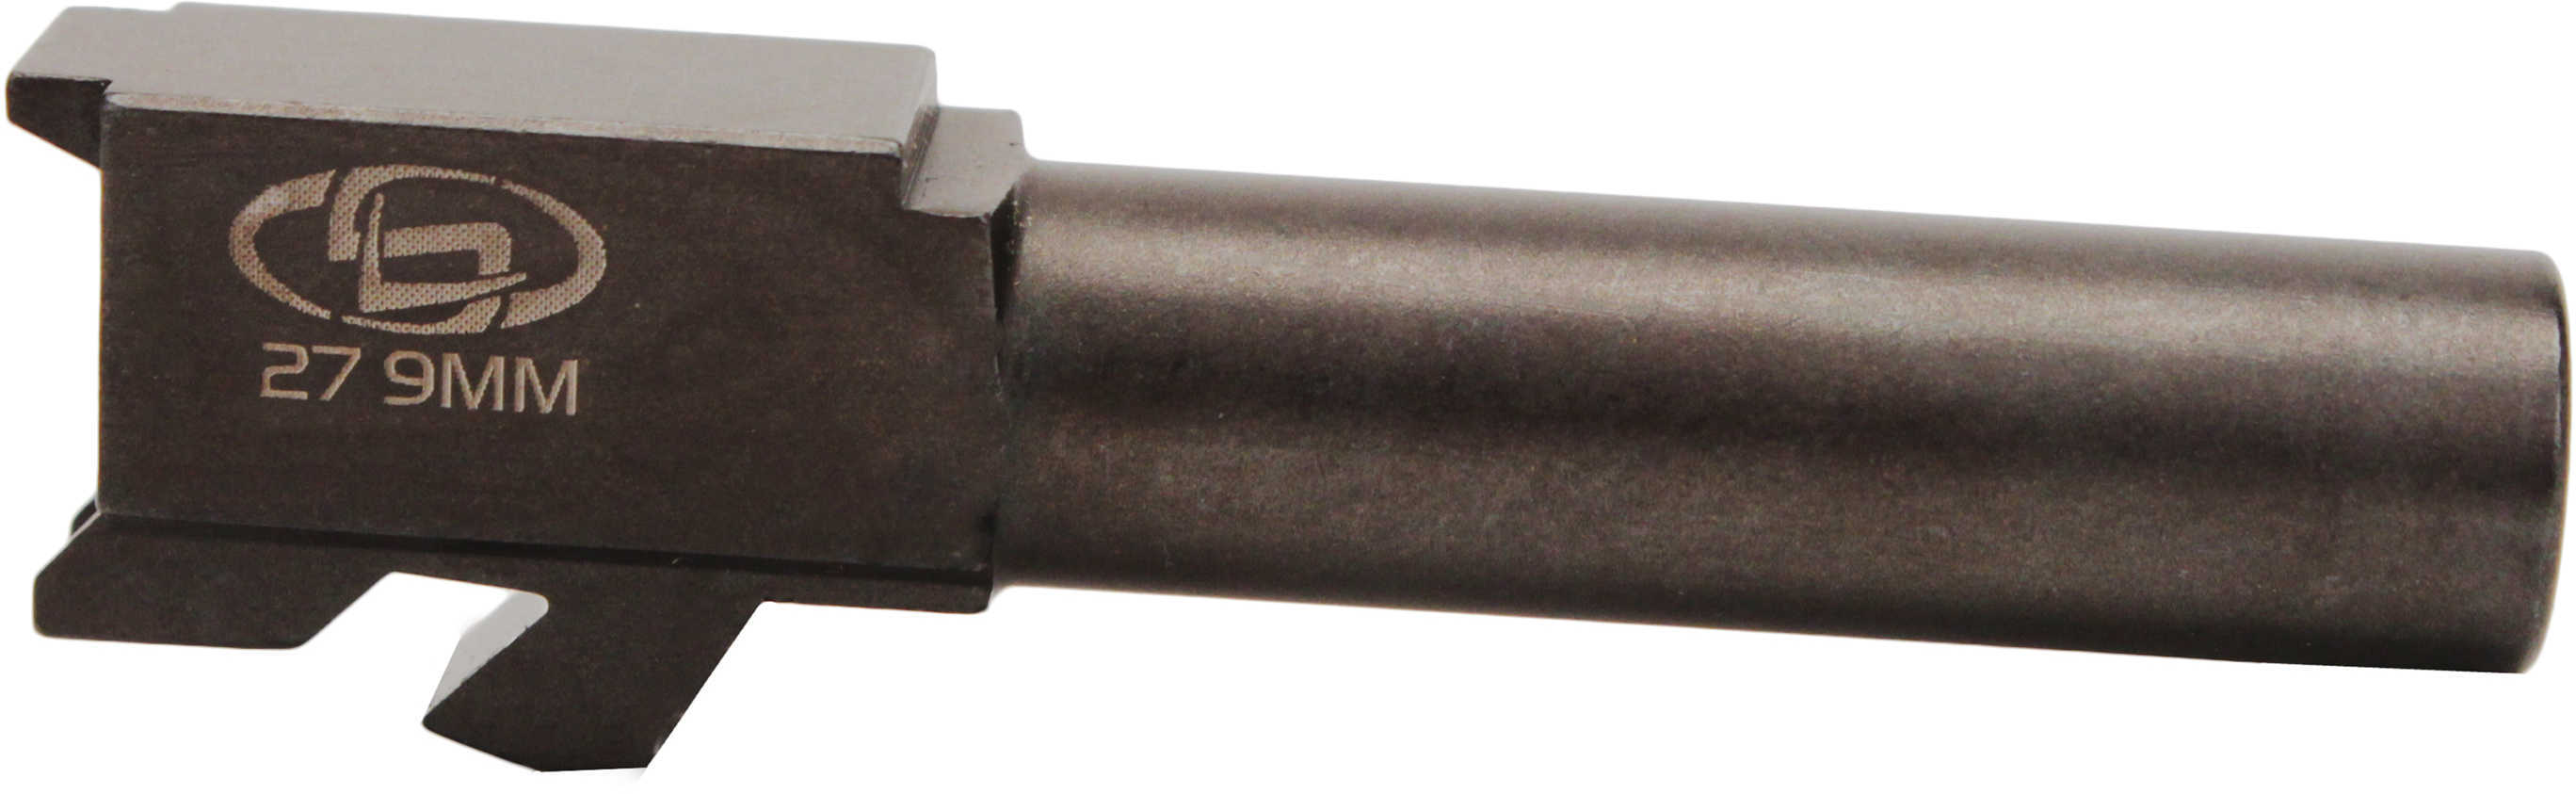 StormLake Barrels Lake for Glock 27 9mm Conversion 3.46" Black Md: 34053